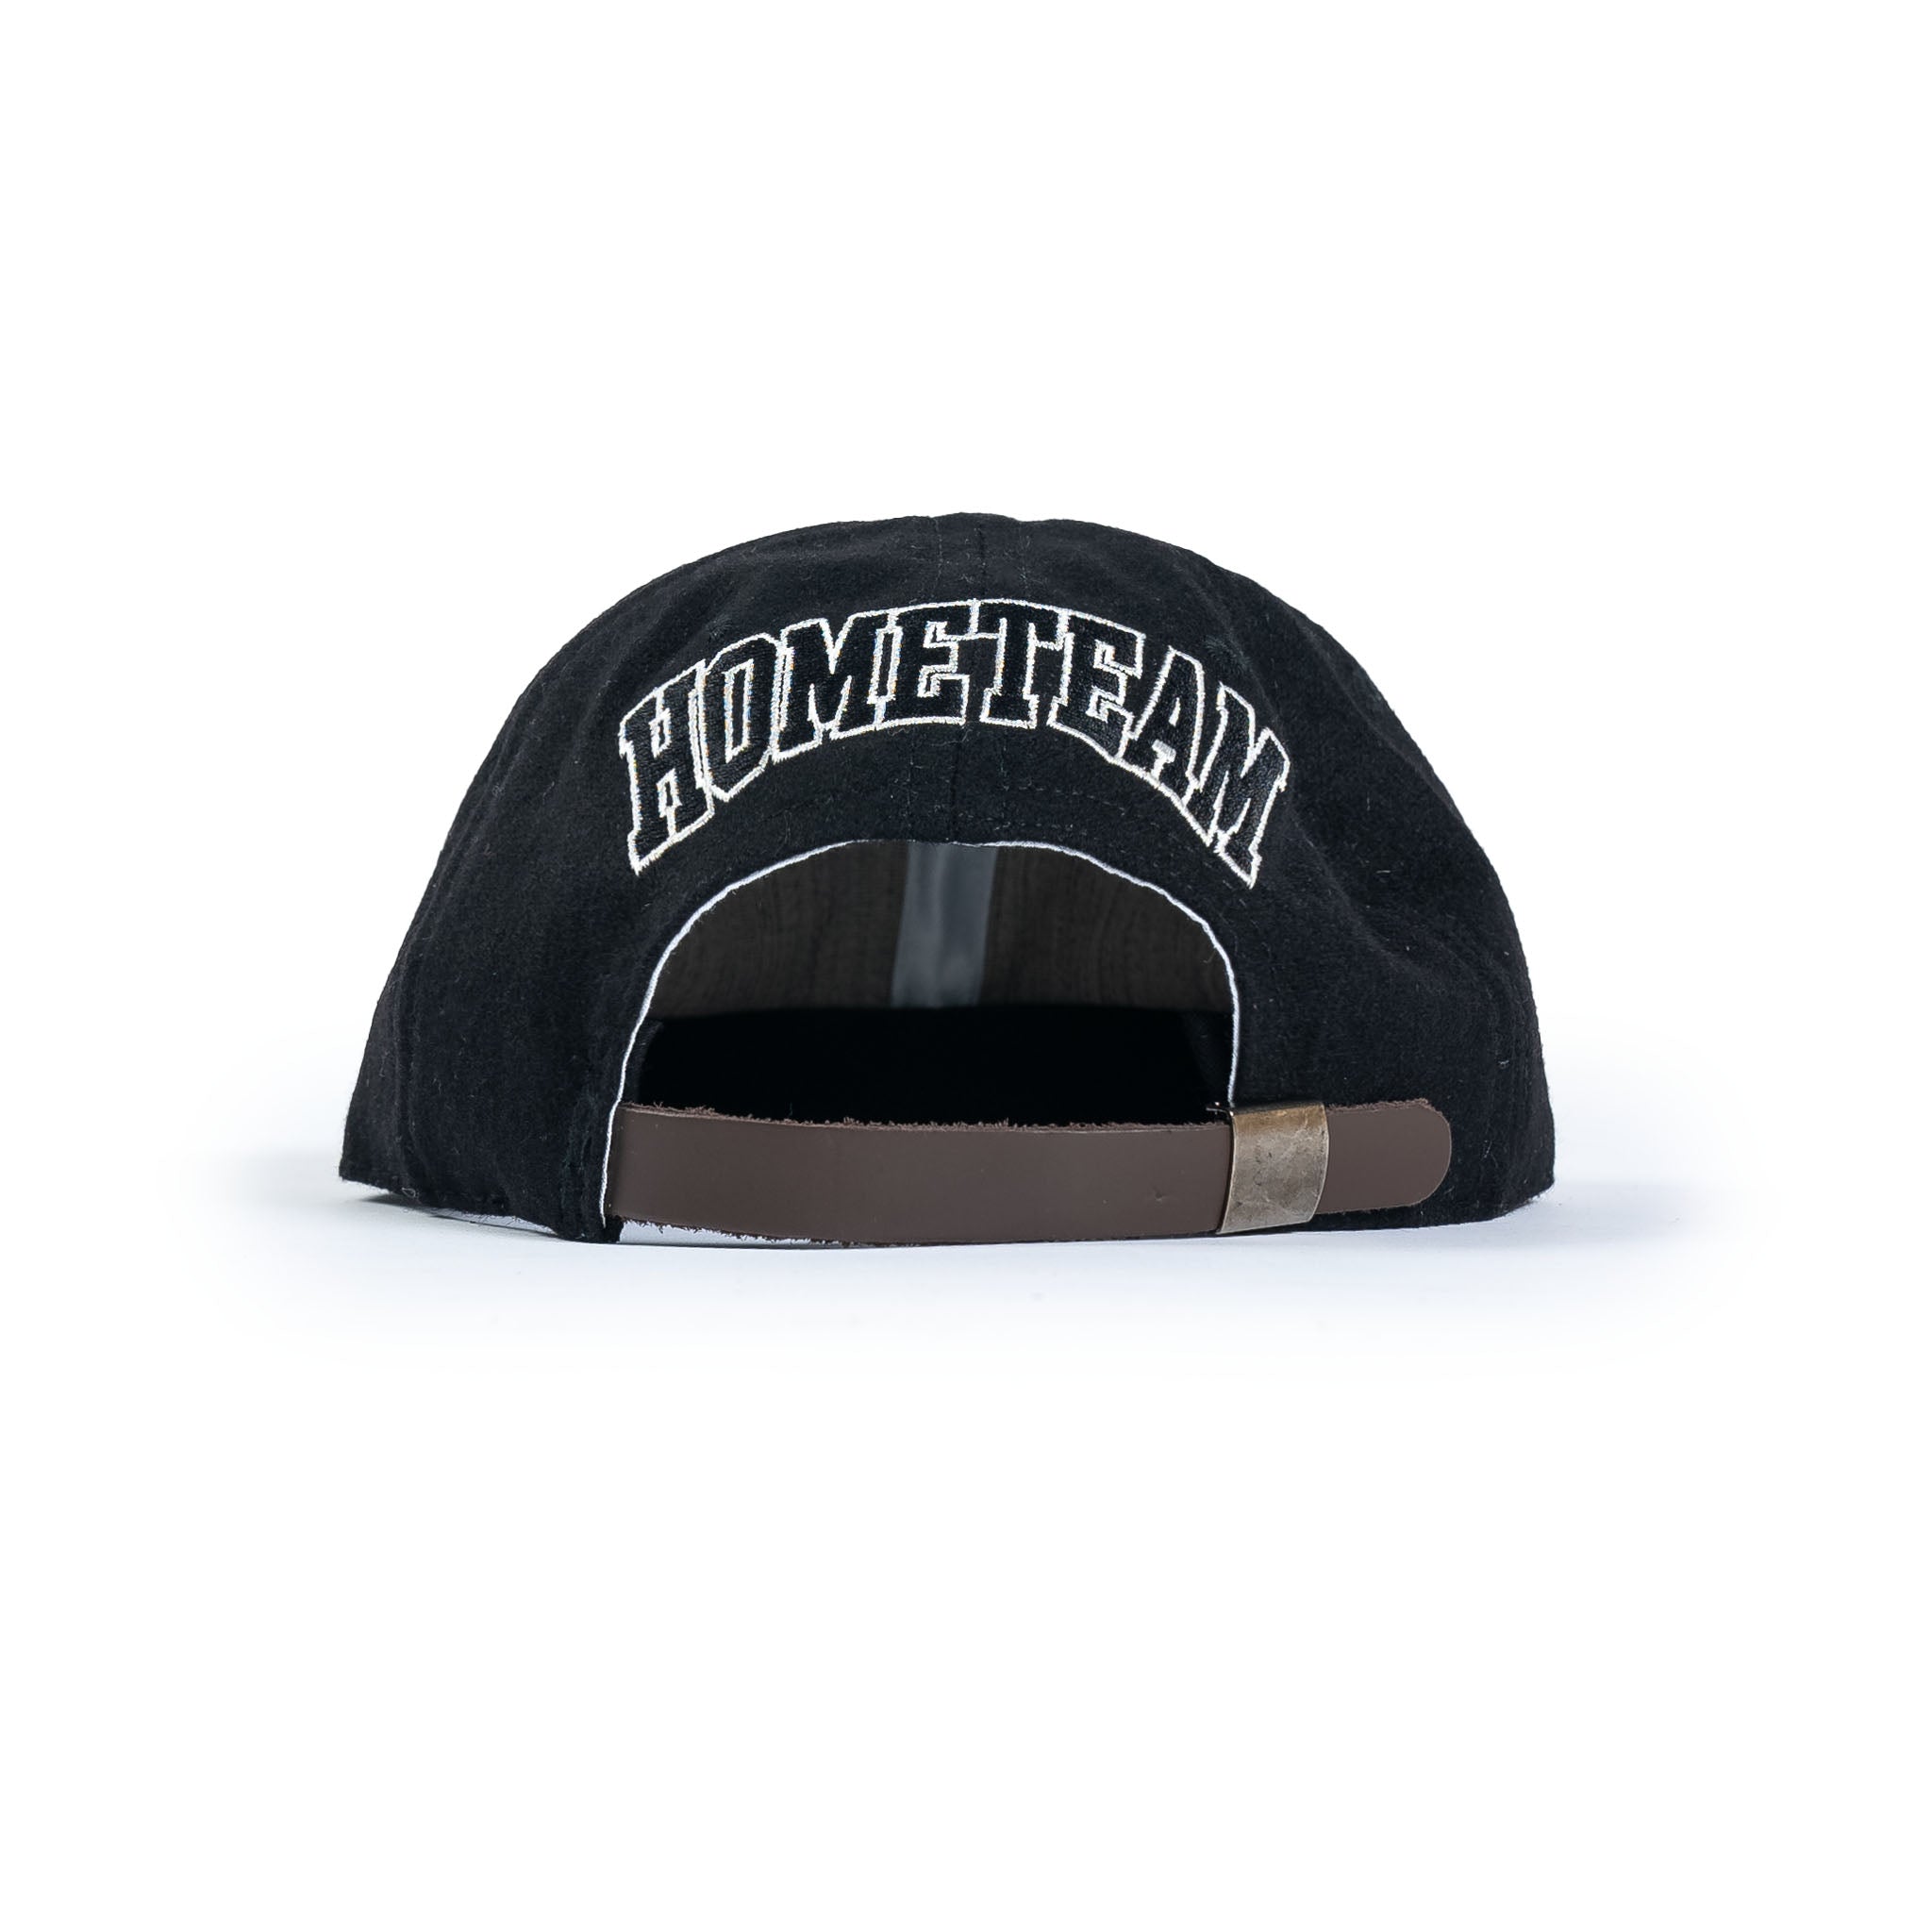 HOMETEAM Back Cap by Ebbets Field